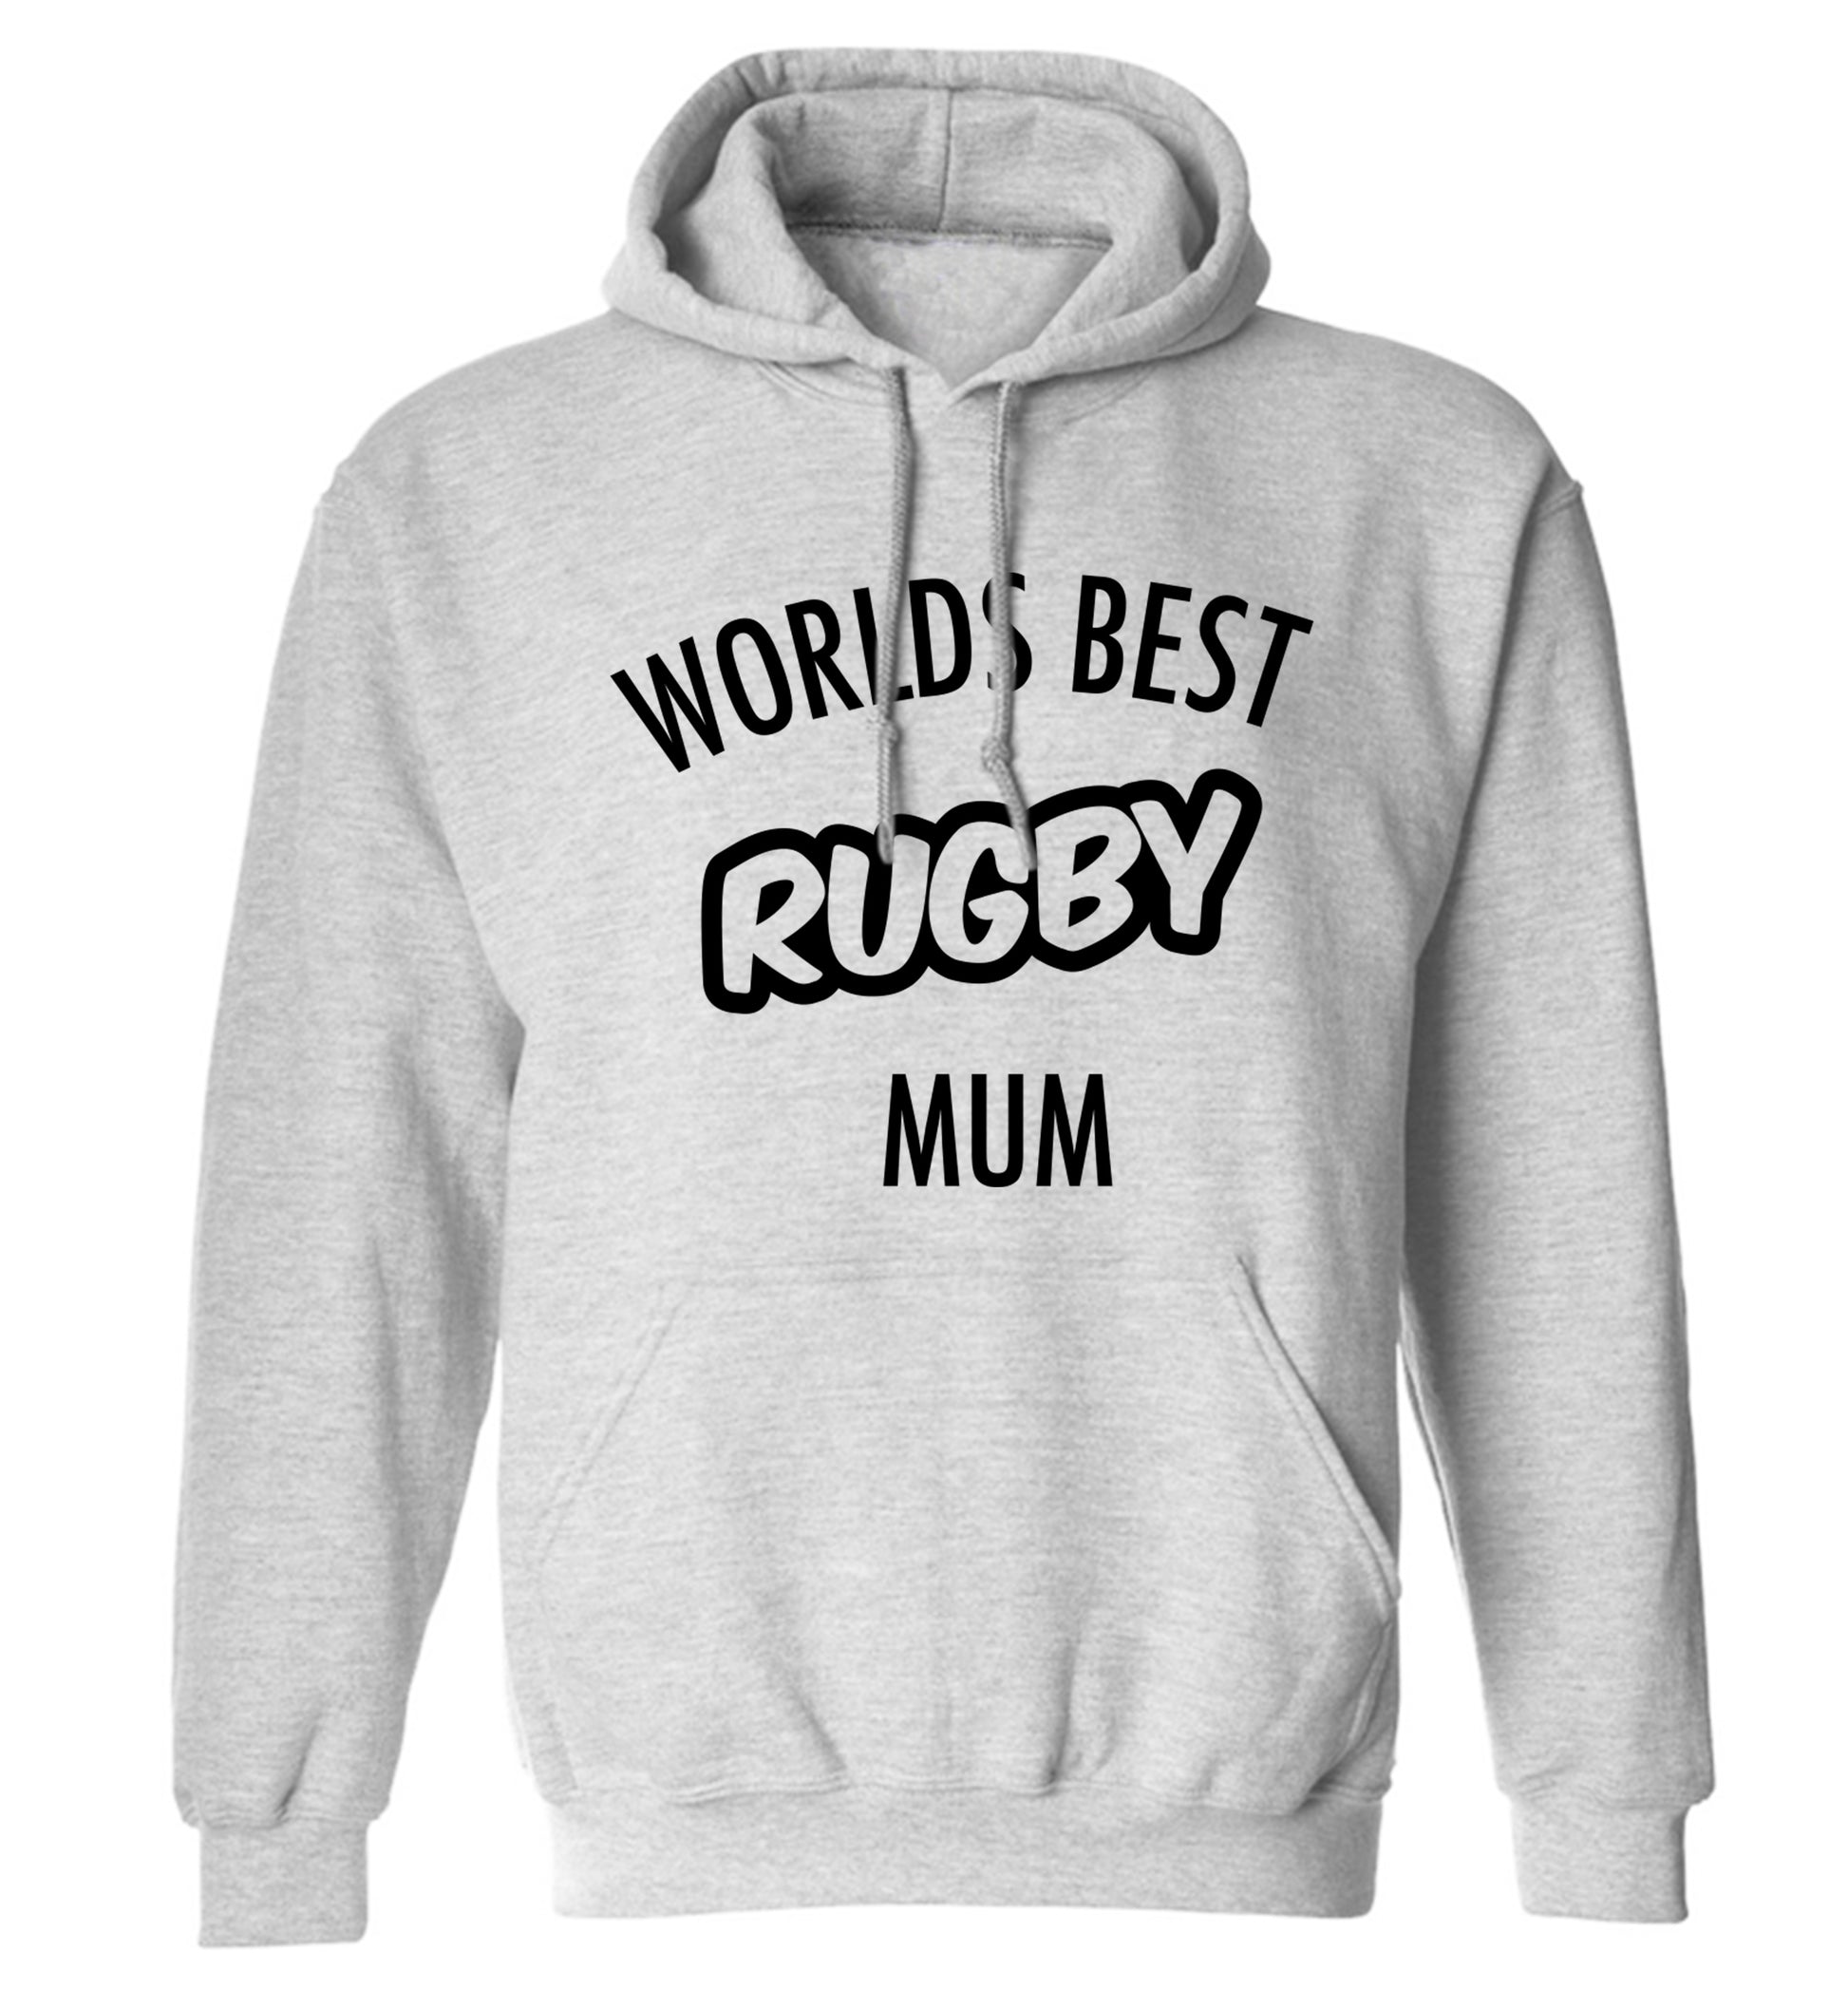 Worlds best rugby mum adults unisex grey hoodie 2XL